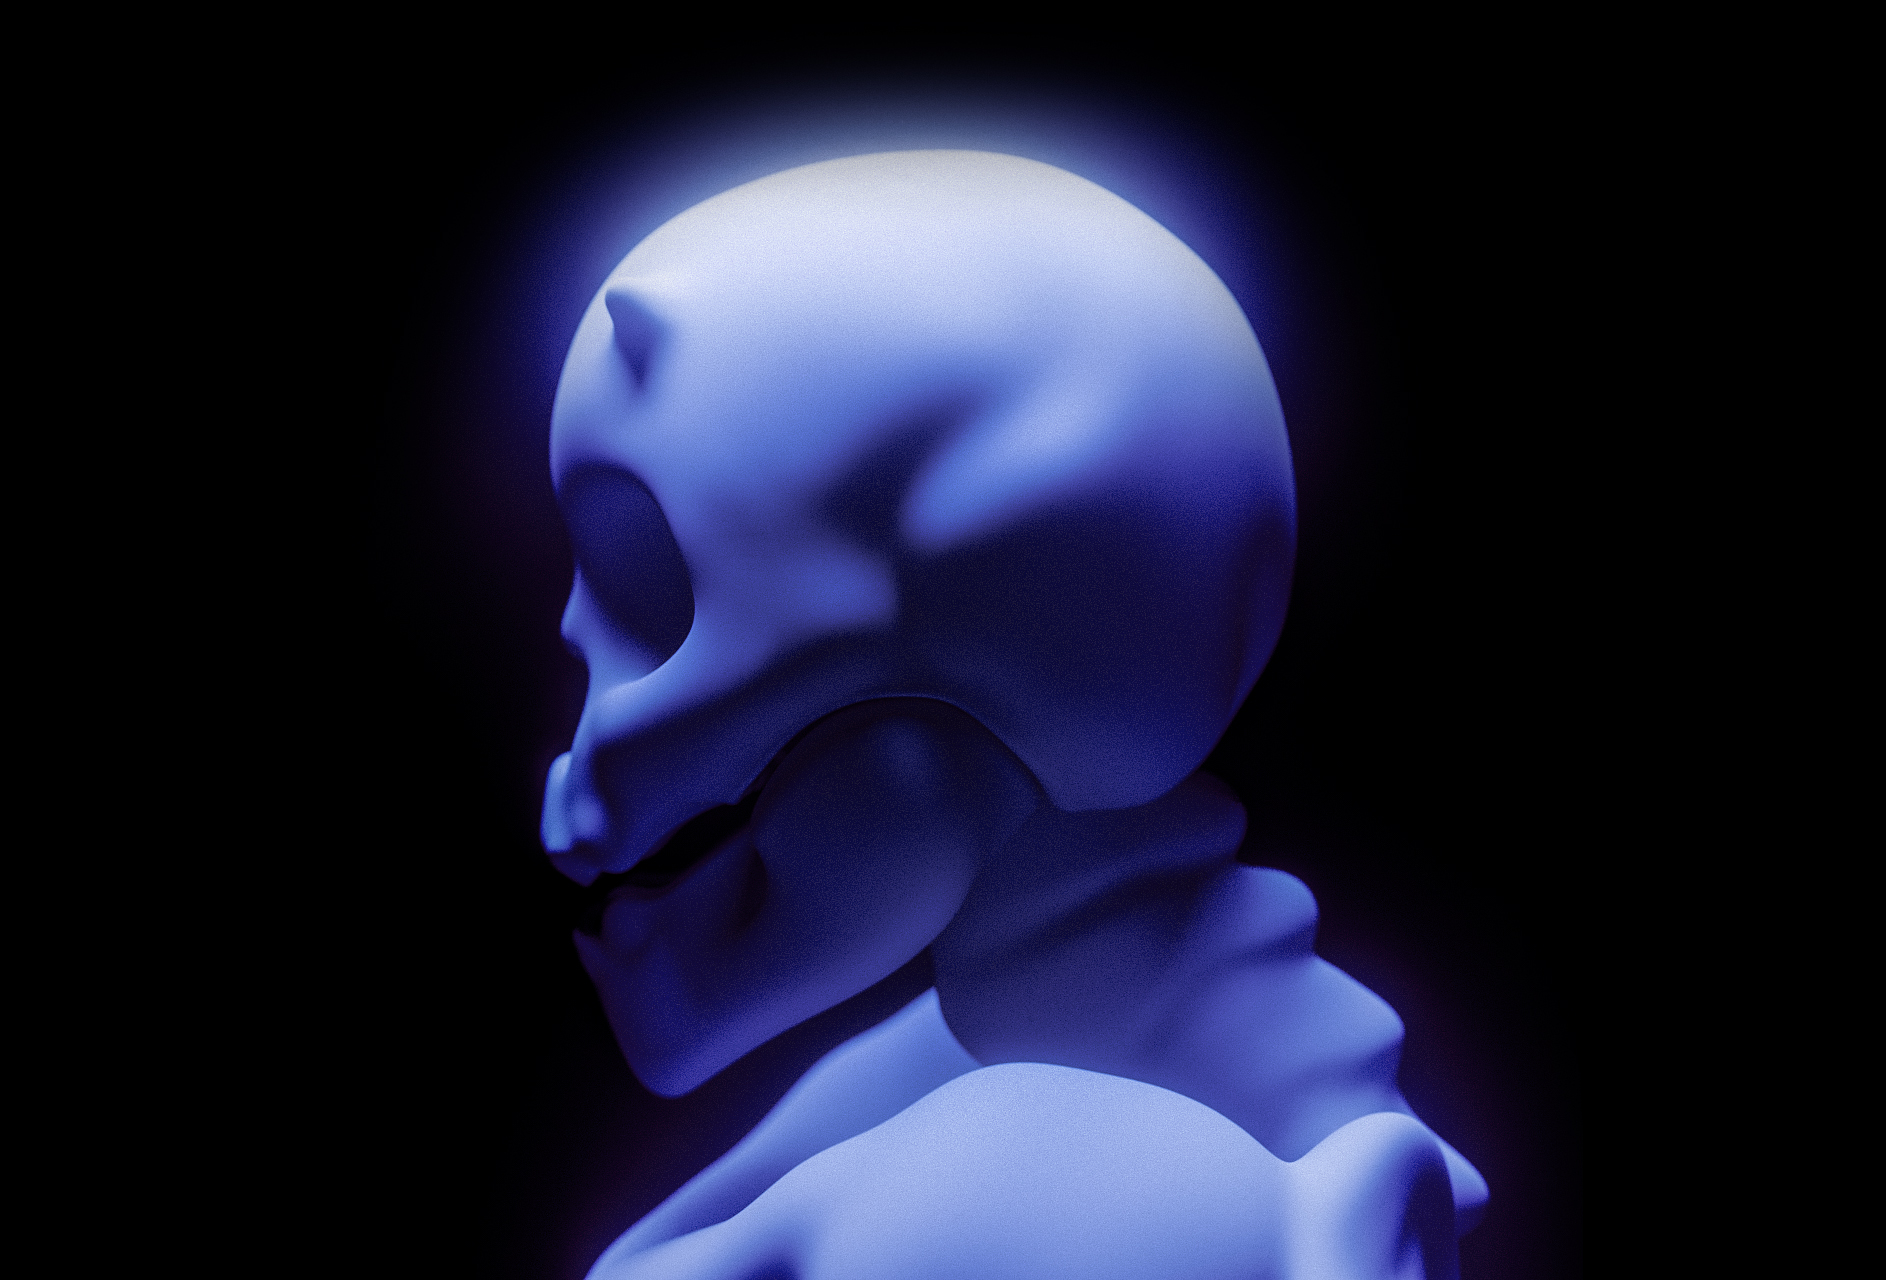 Skeleton_blue_pose_3_0113-copy